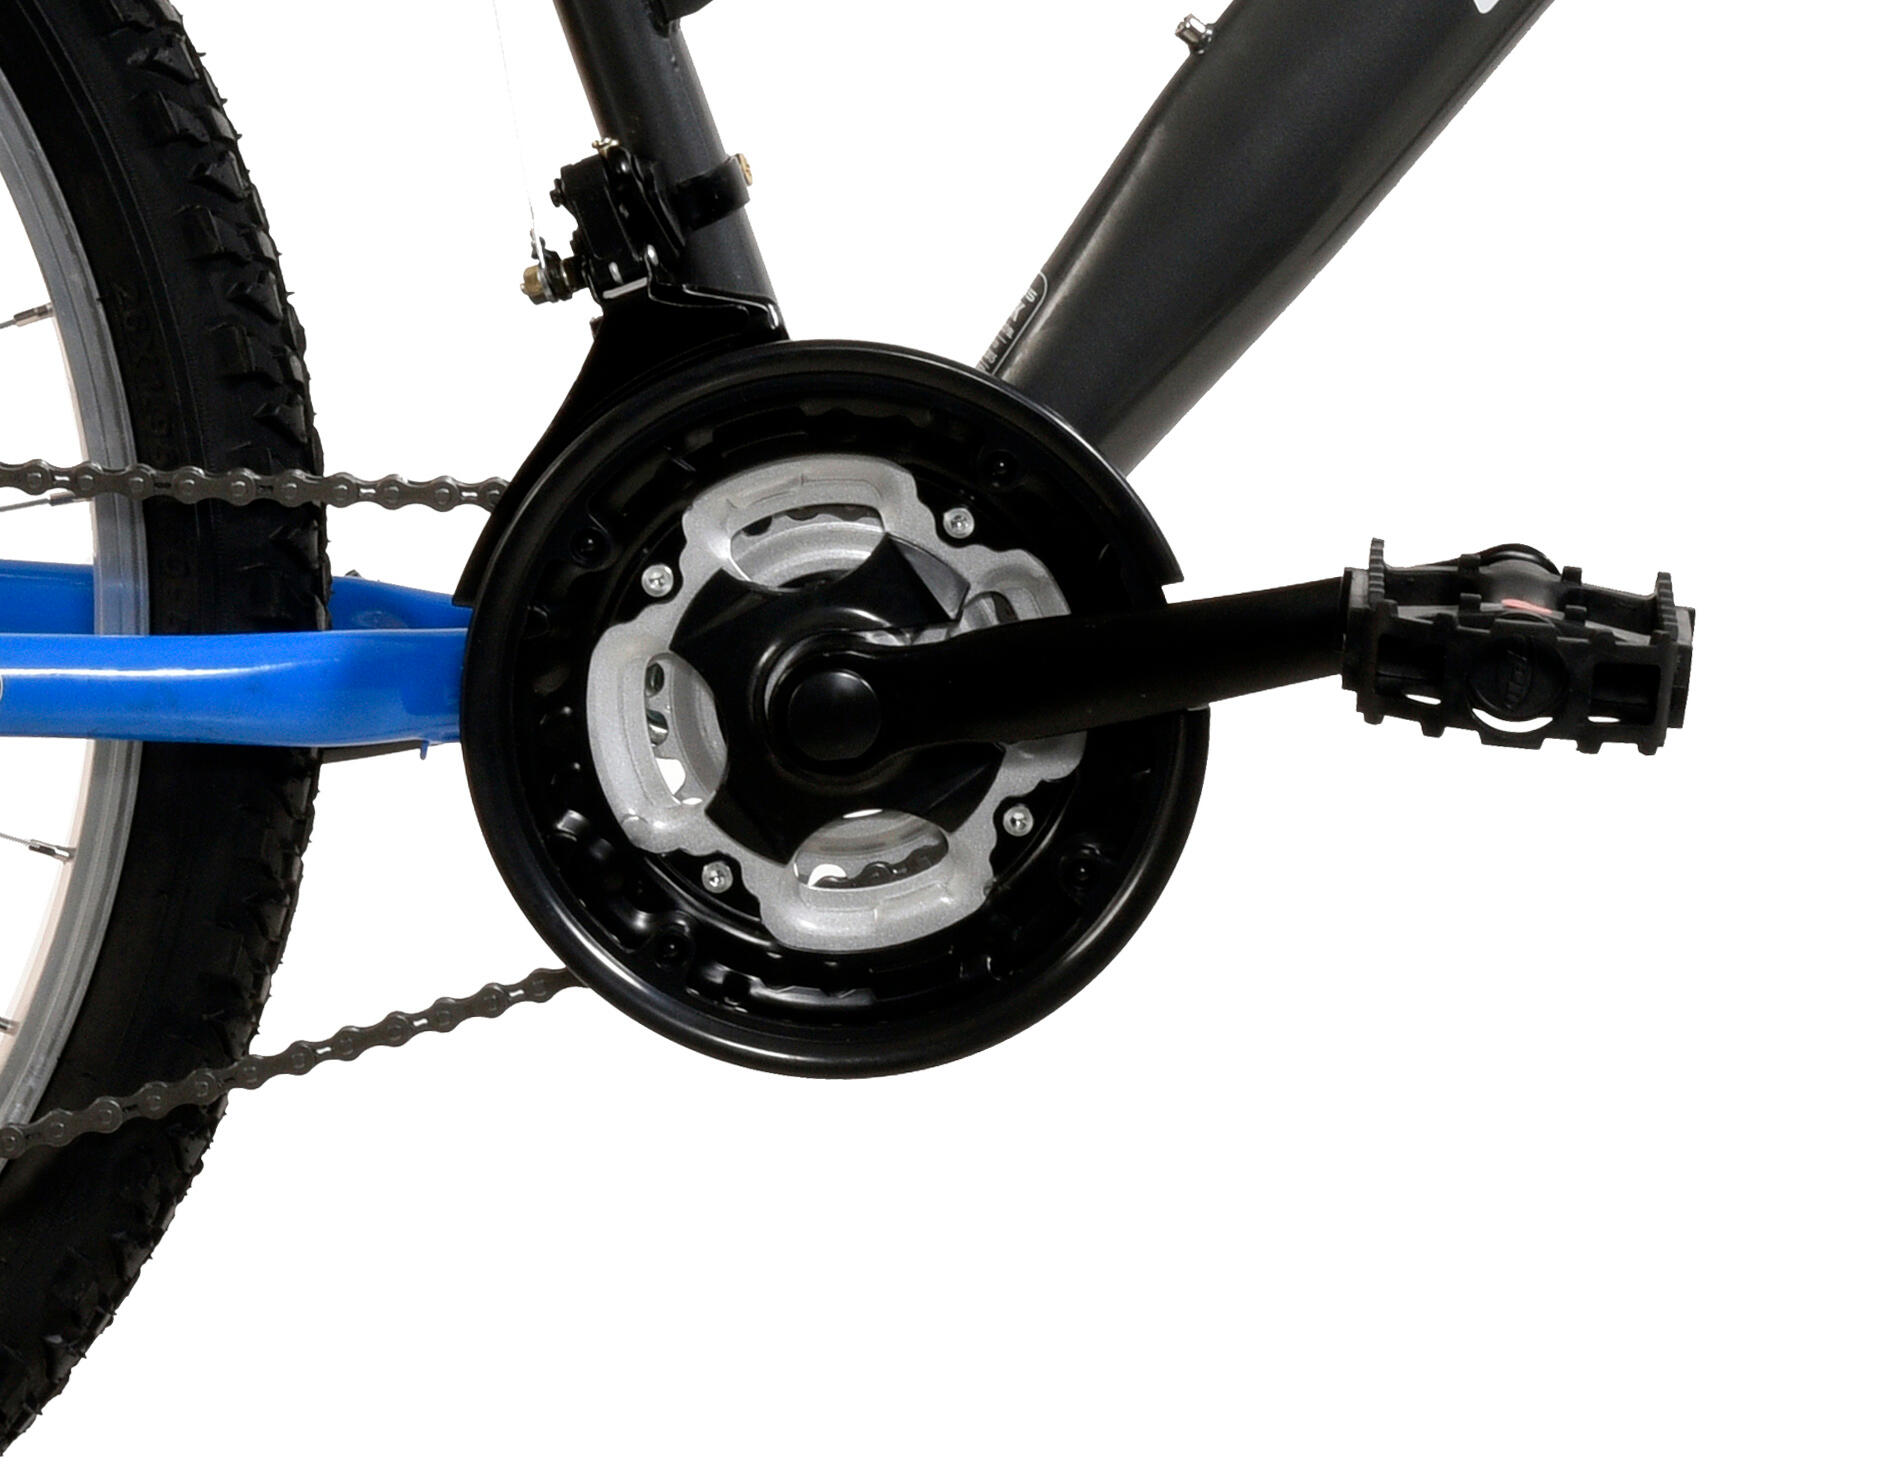 Basis Link Adult's Full Suspension Mountain Bike, 26In Wheel - Graphite/Blue 4/5